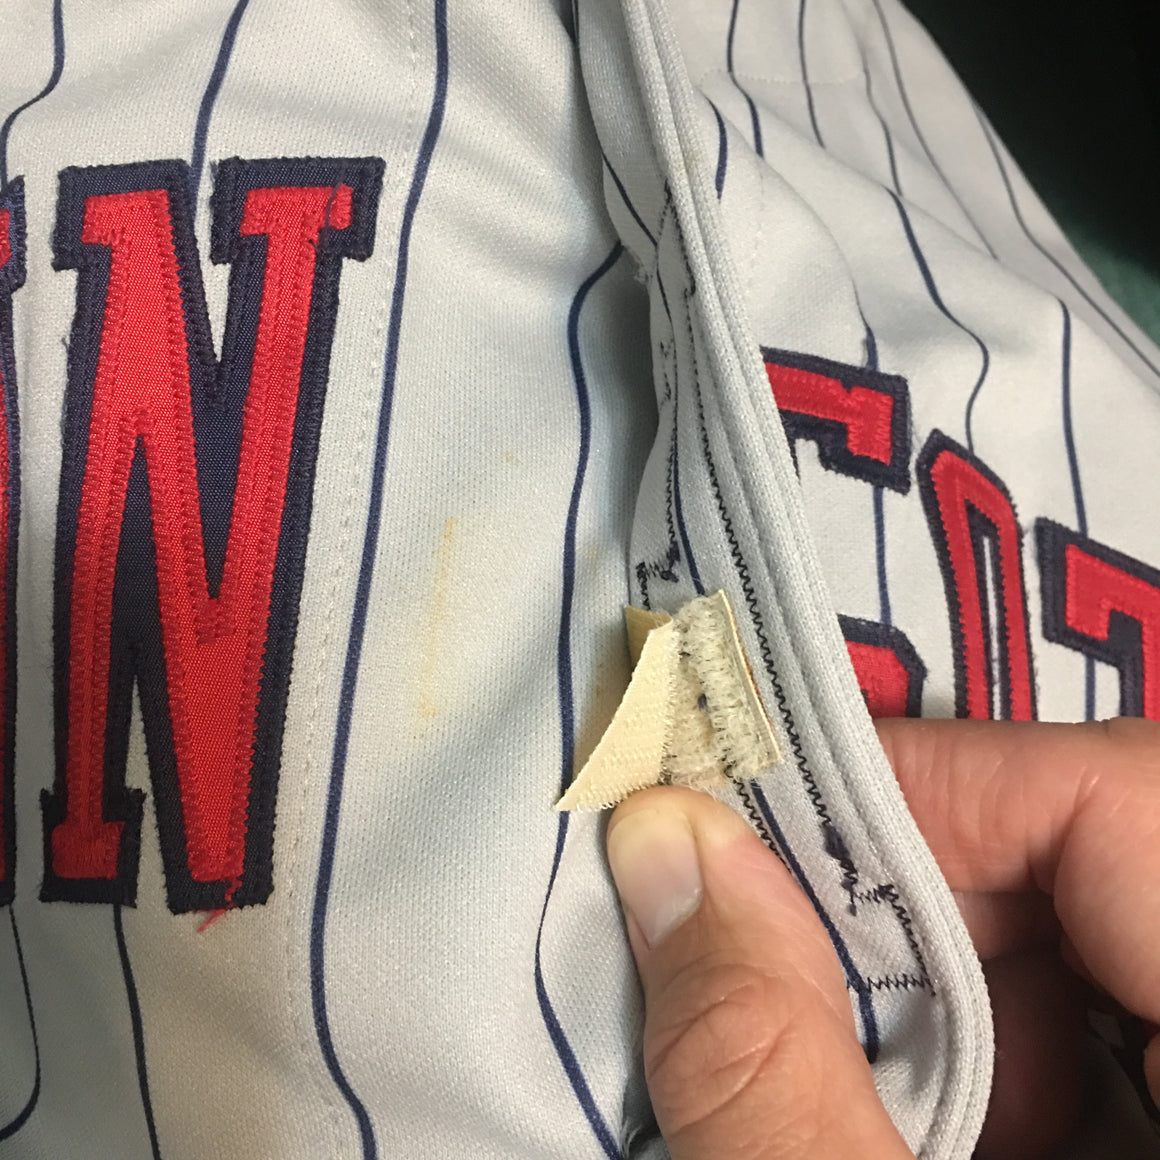 Minnesota Twins Greg Gagne authentic jersey - size 42 / M-L